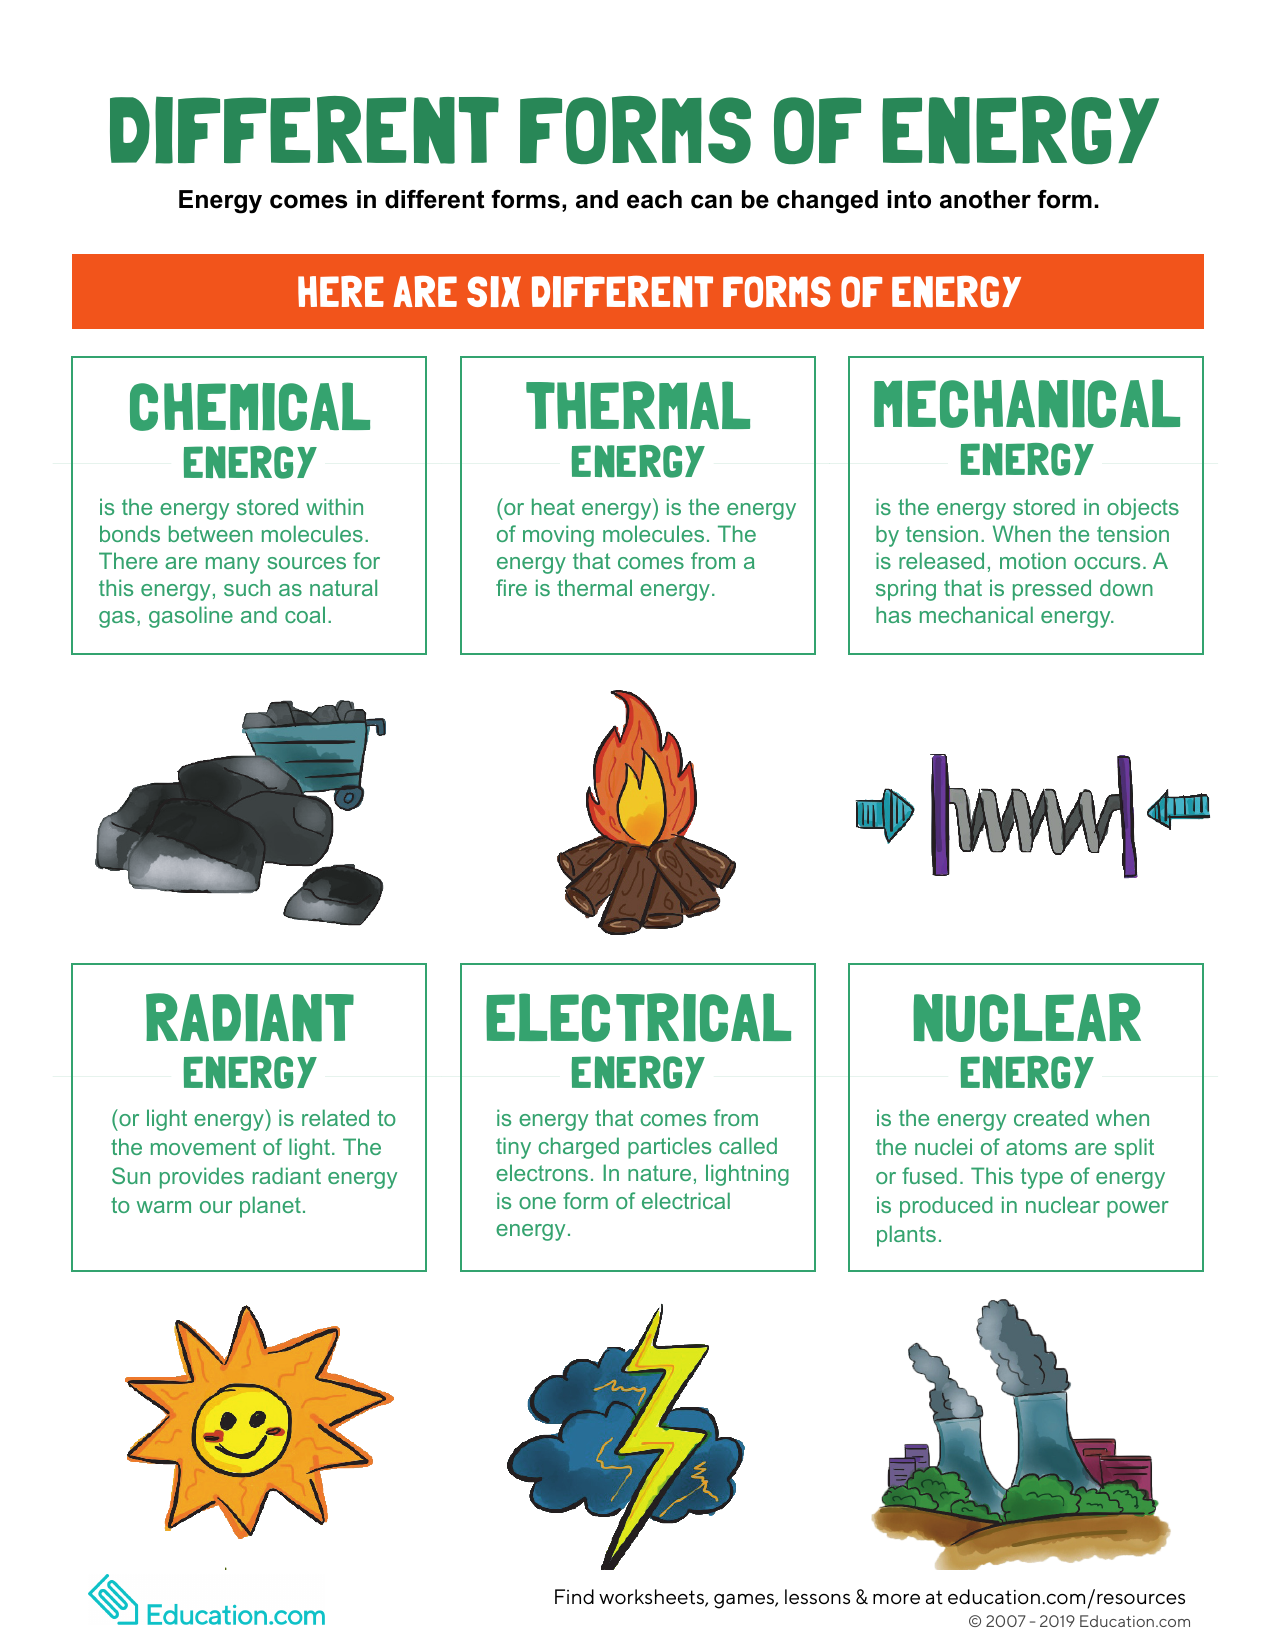 10 Types Of Energy